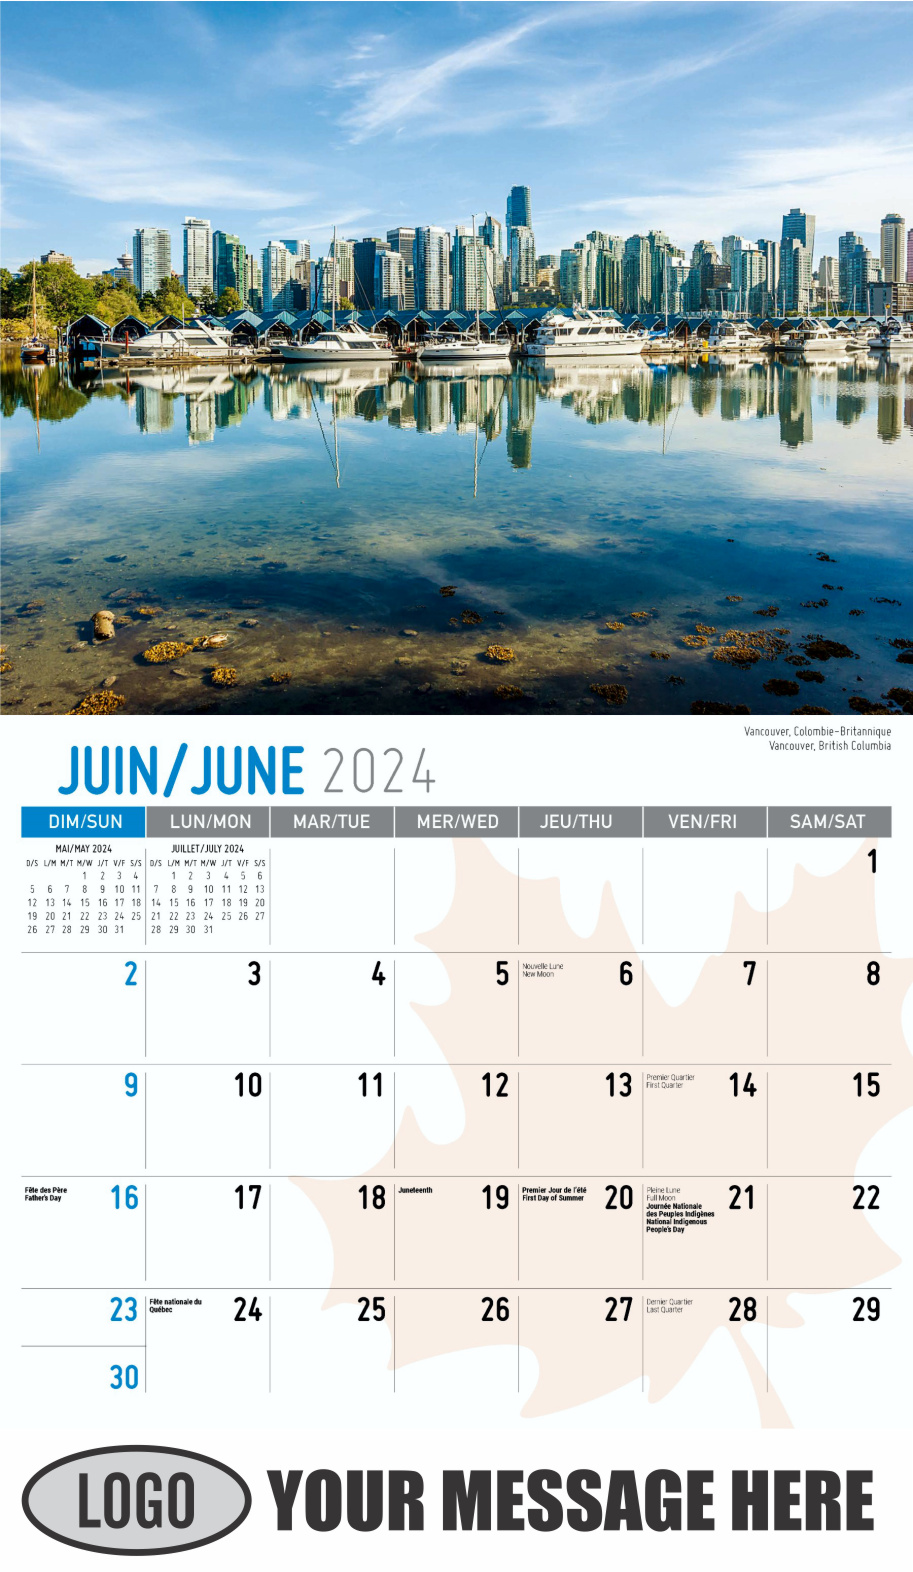 Scenes of Canada 2024 Bilingual Business Advertising Calendar - June